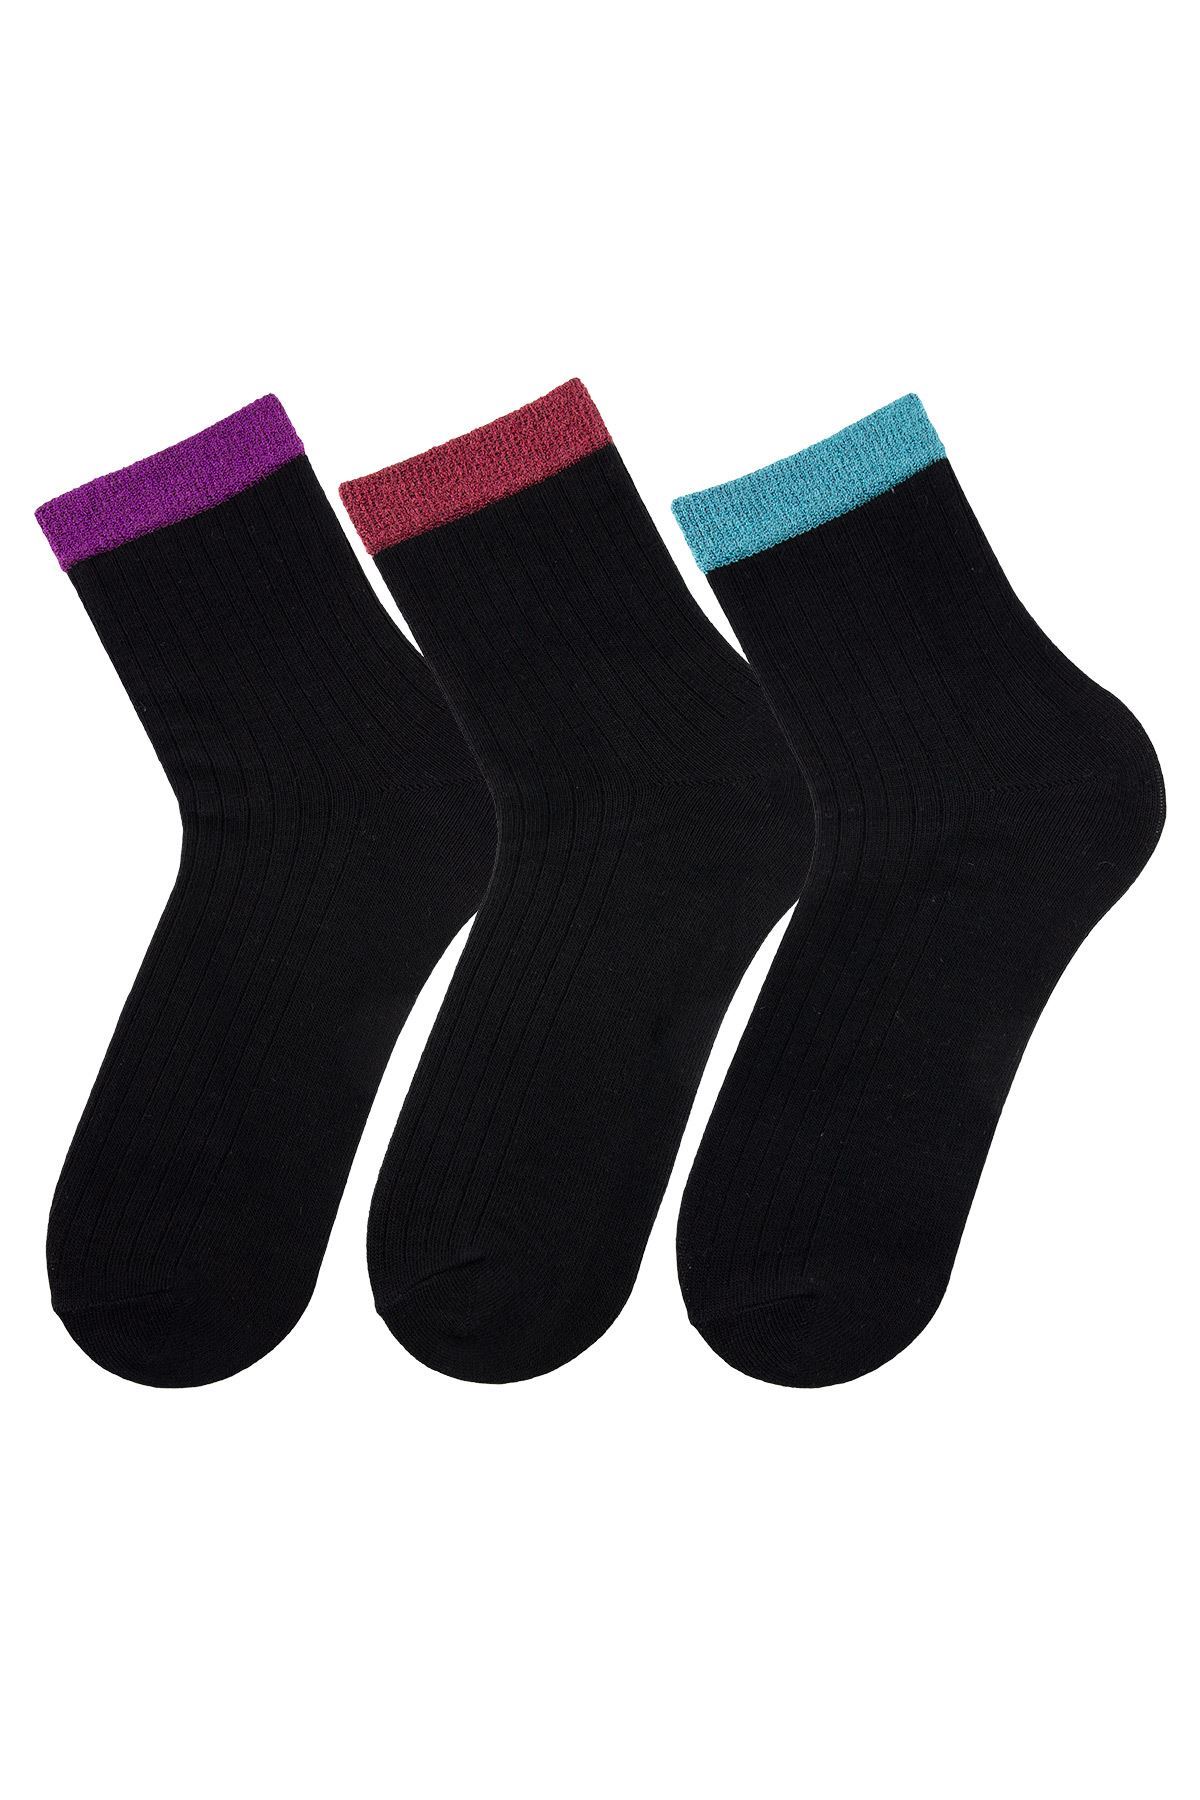 WOMEN RUBBER DERBY MID-CALF SOCKS | Buy Branded Wholesale Socks Online ...